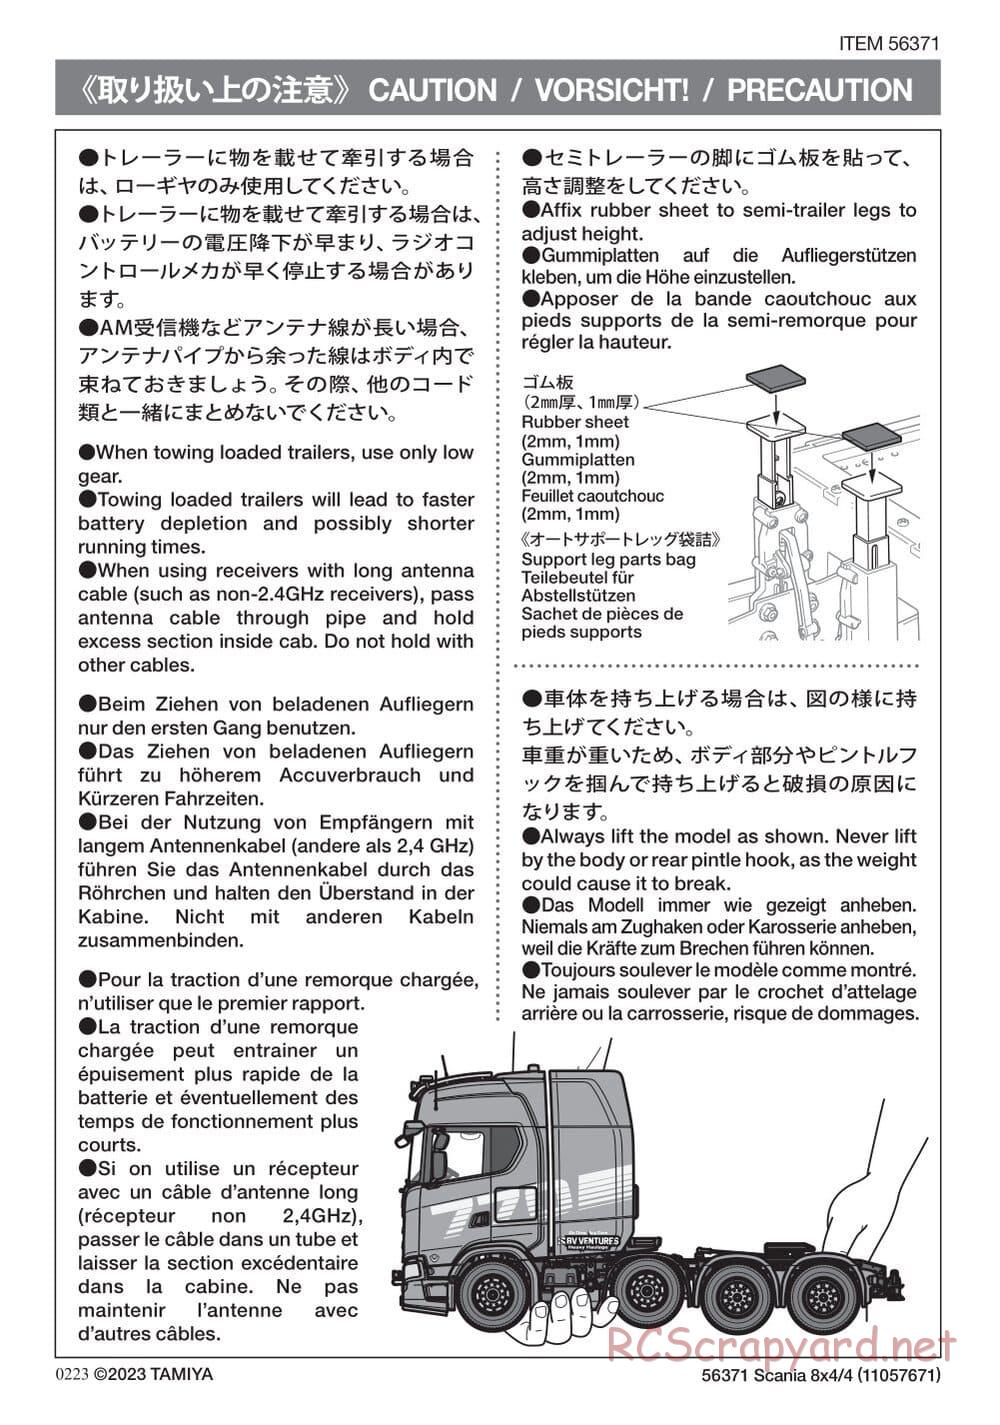 Tamiya - Scania 770 S 8x4/4 Chassis - Manual - Page 57